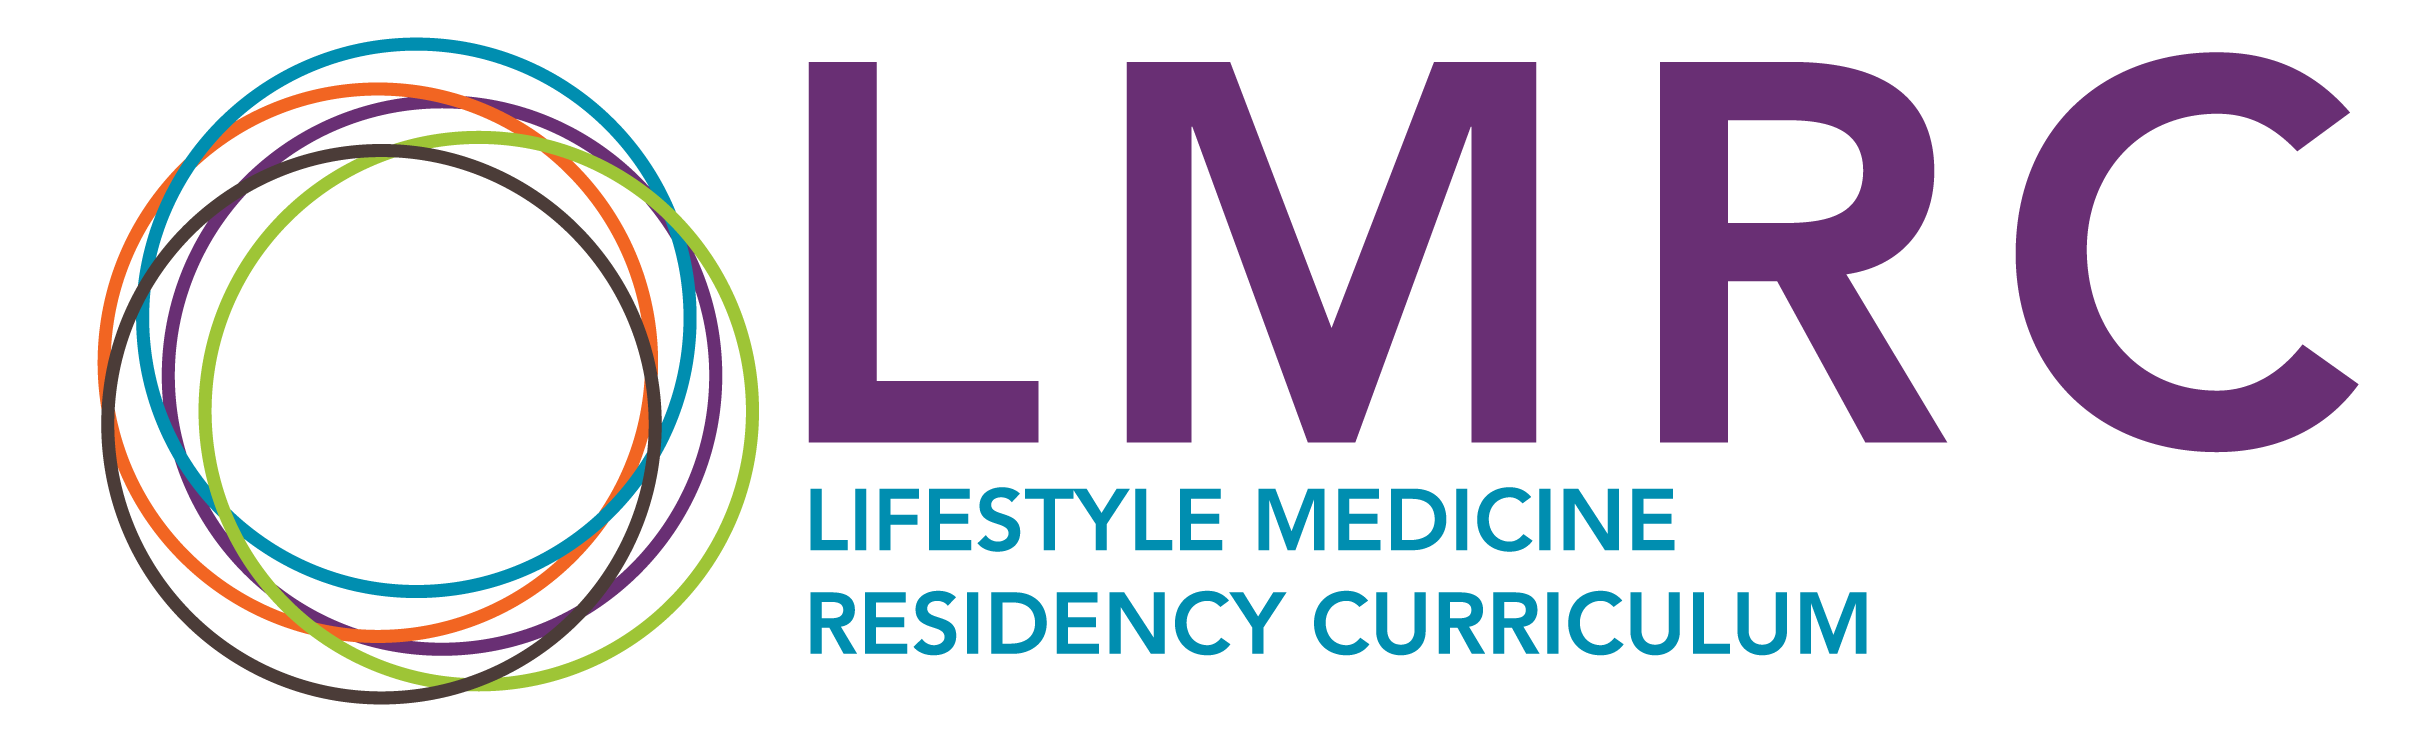 ACLM | Lifestyle Medicine Education